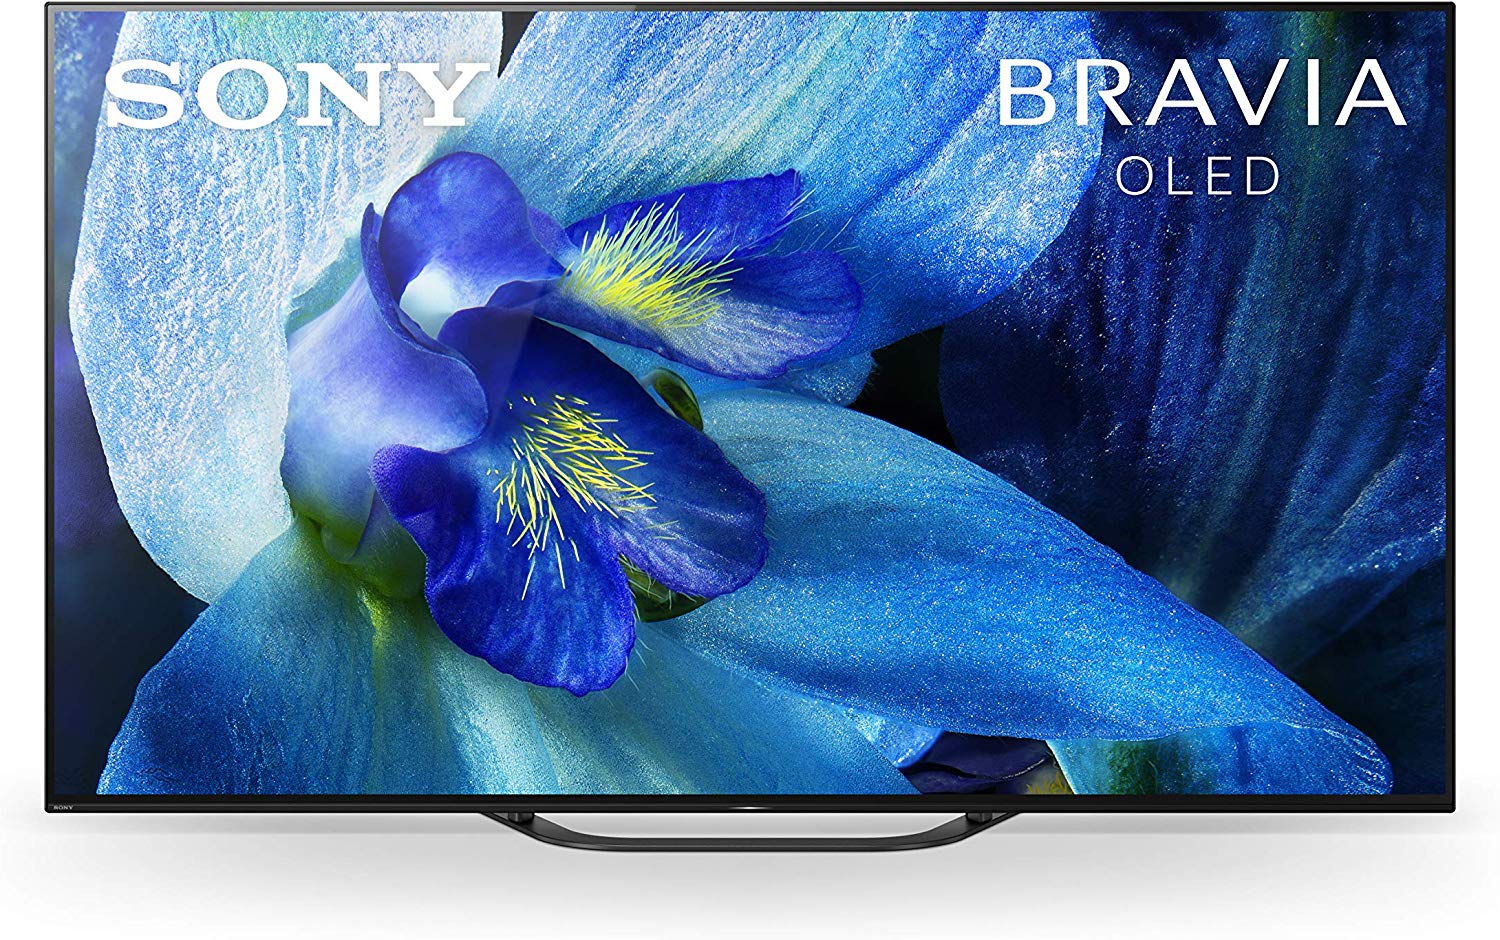 Save up to 40% on Select Sony Bravia OLED 4K Ultra HD Smart TVs